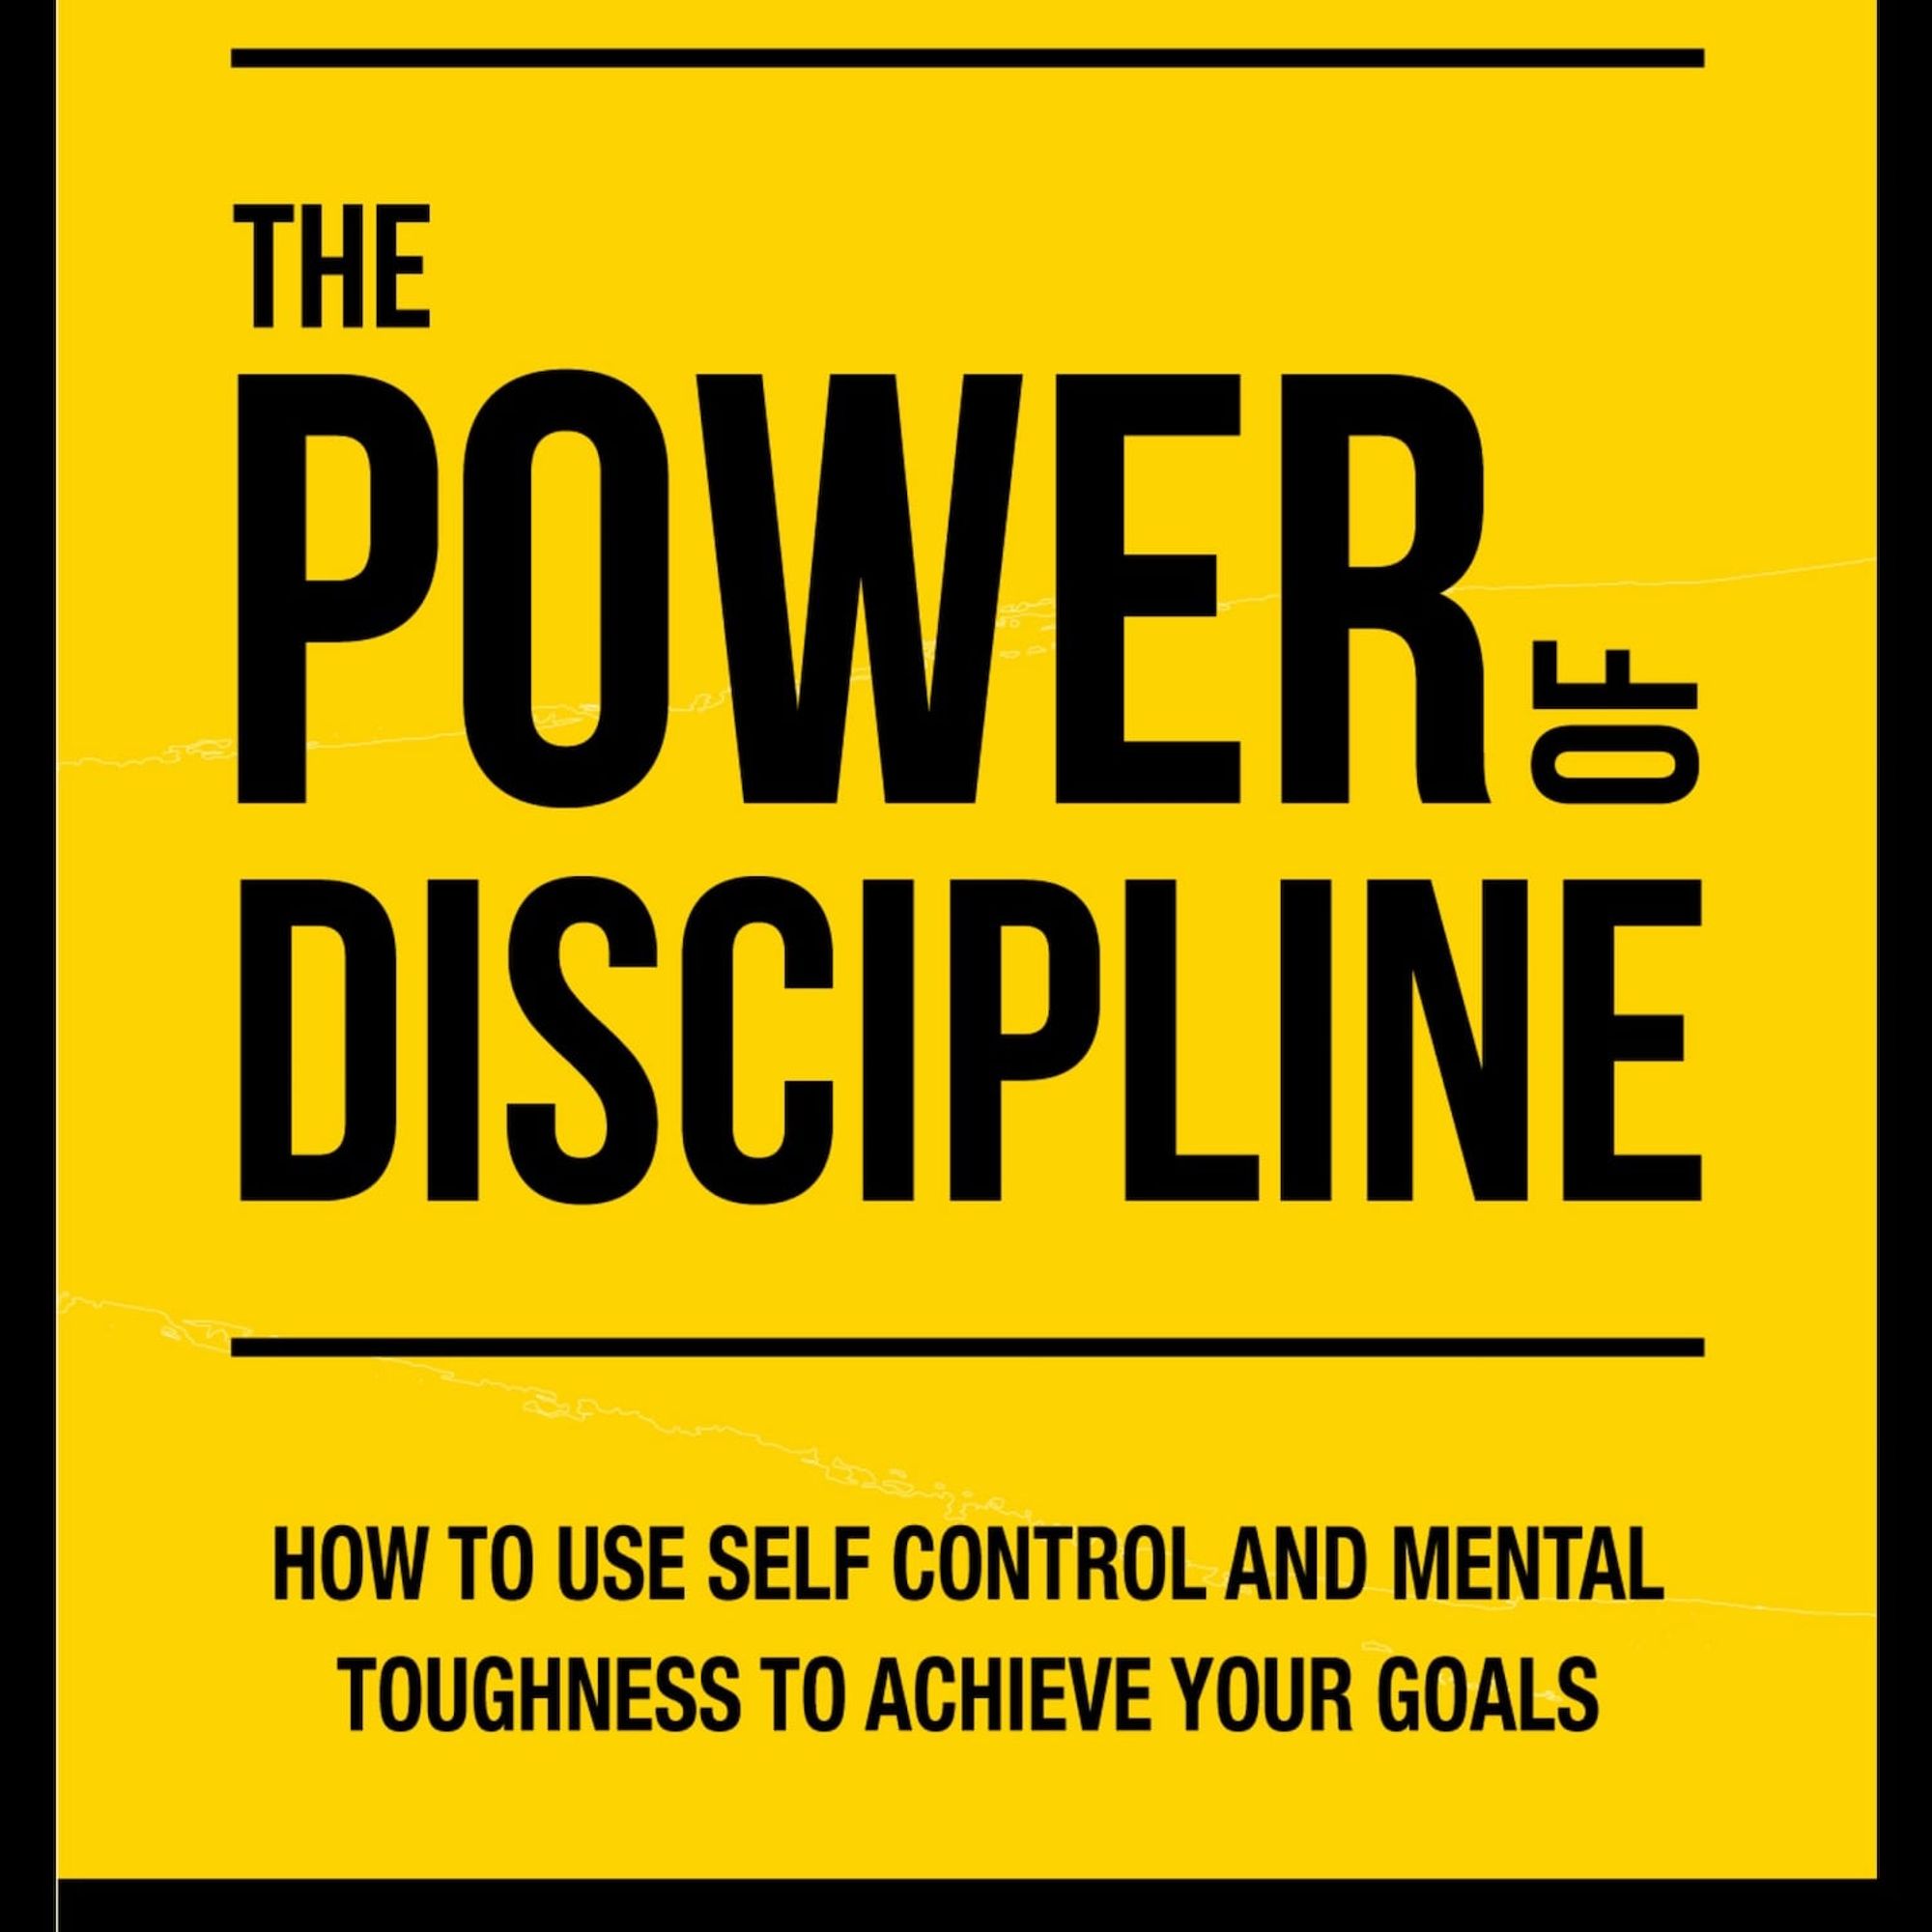 Book-Power-Of-Discipline-square.jpg